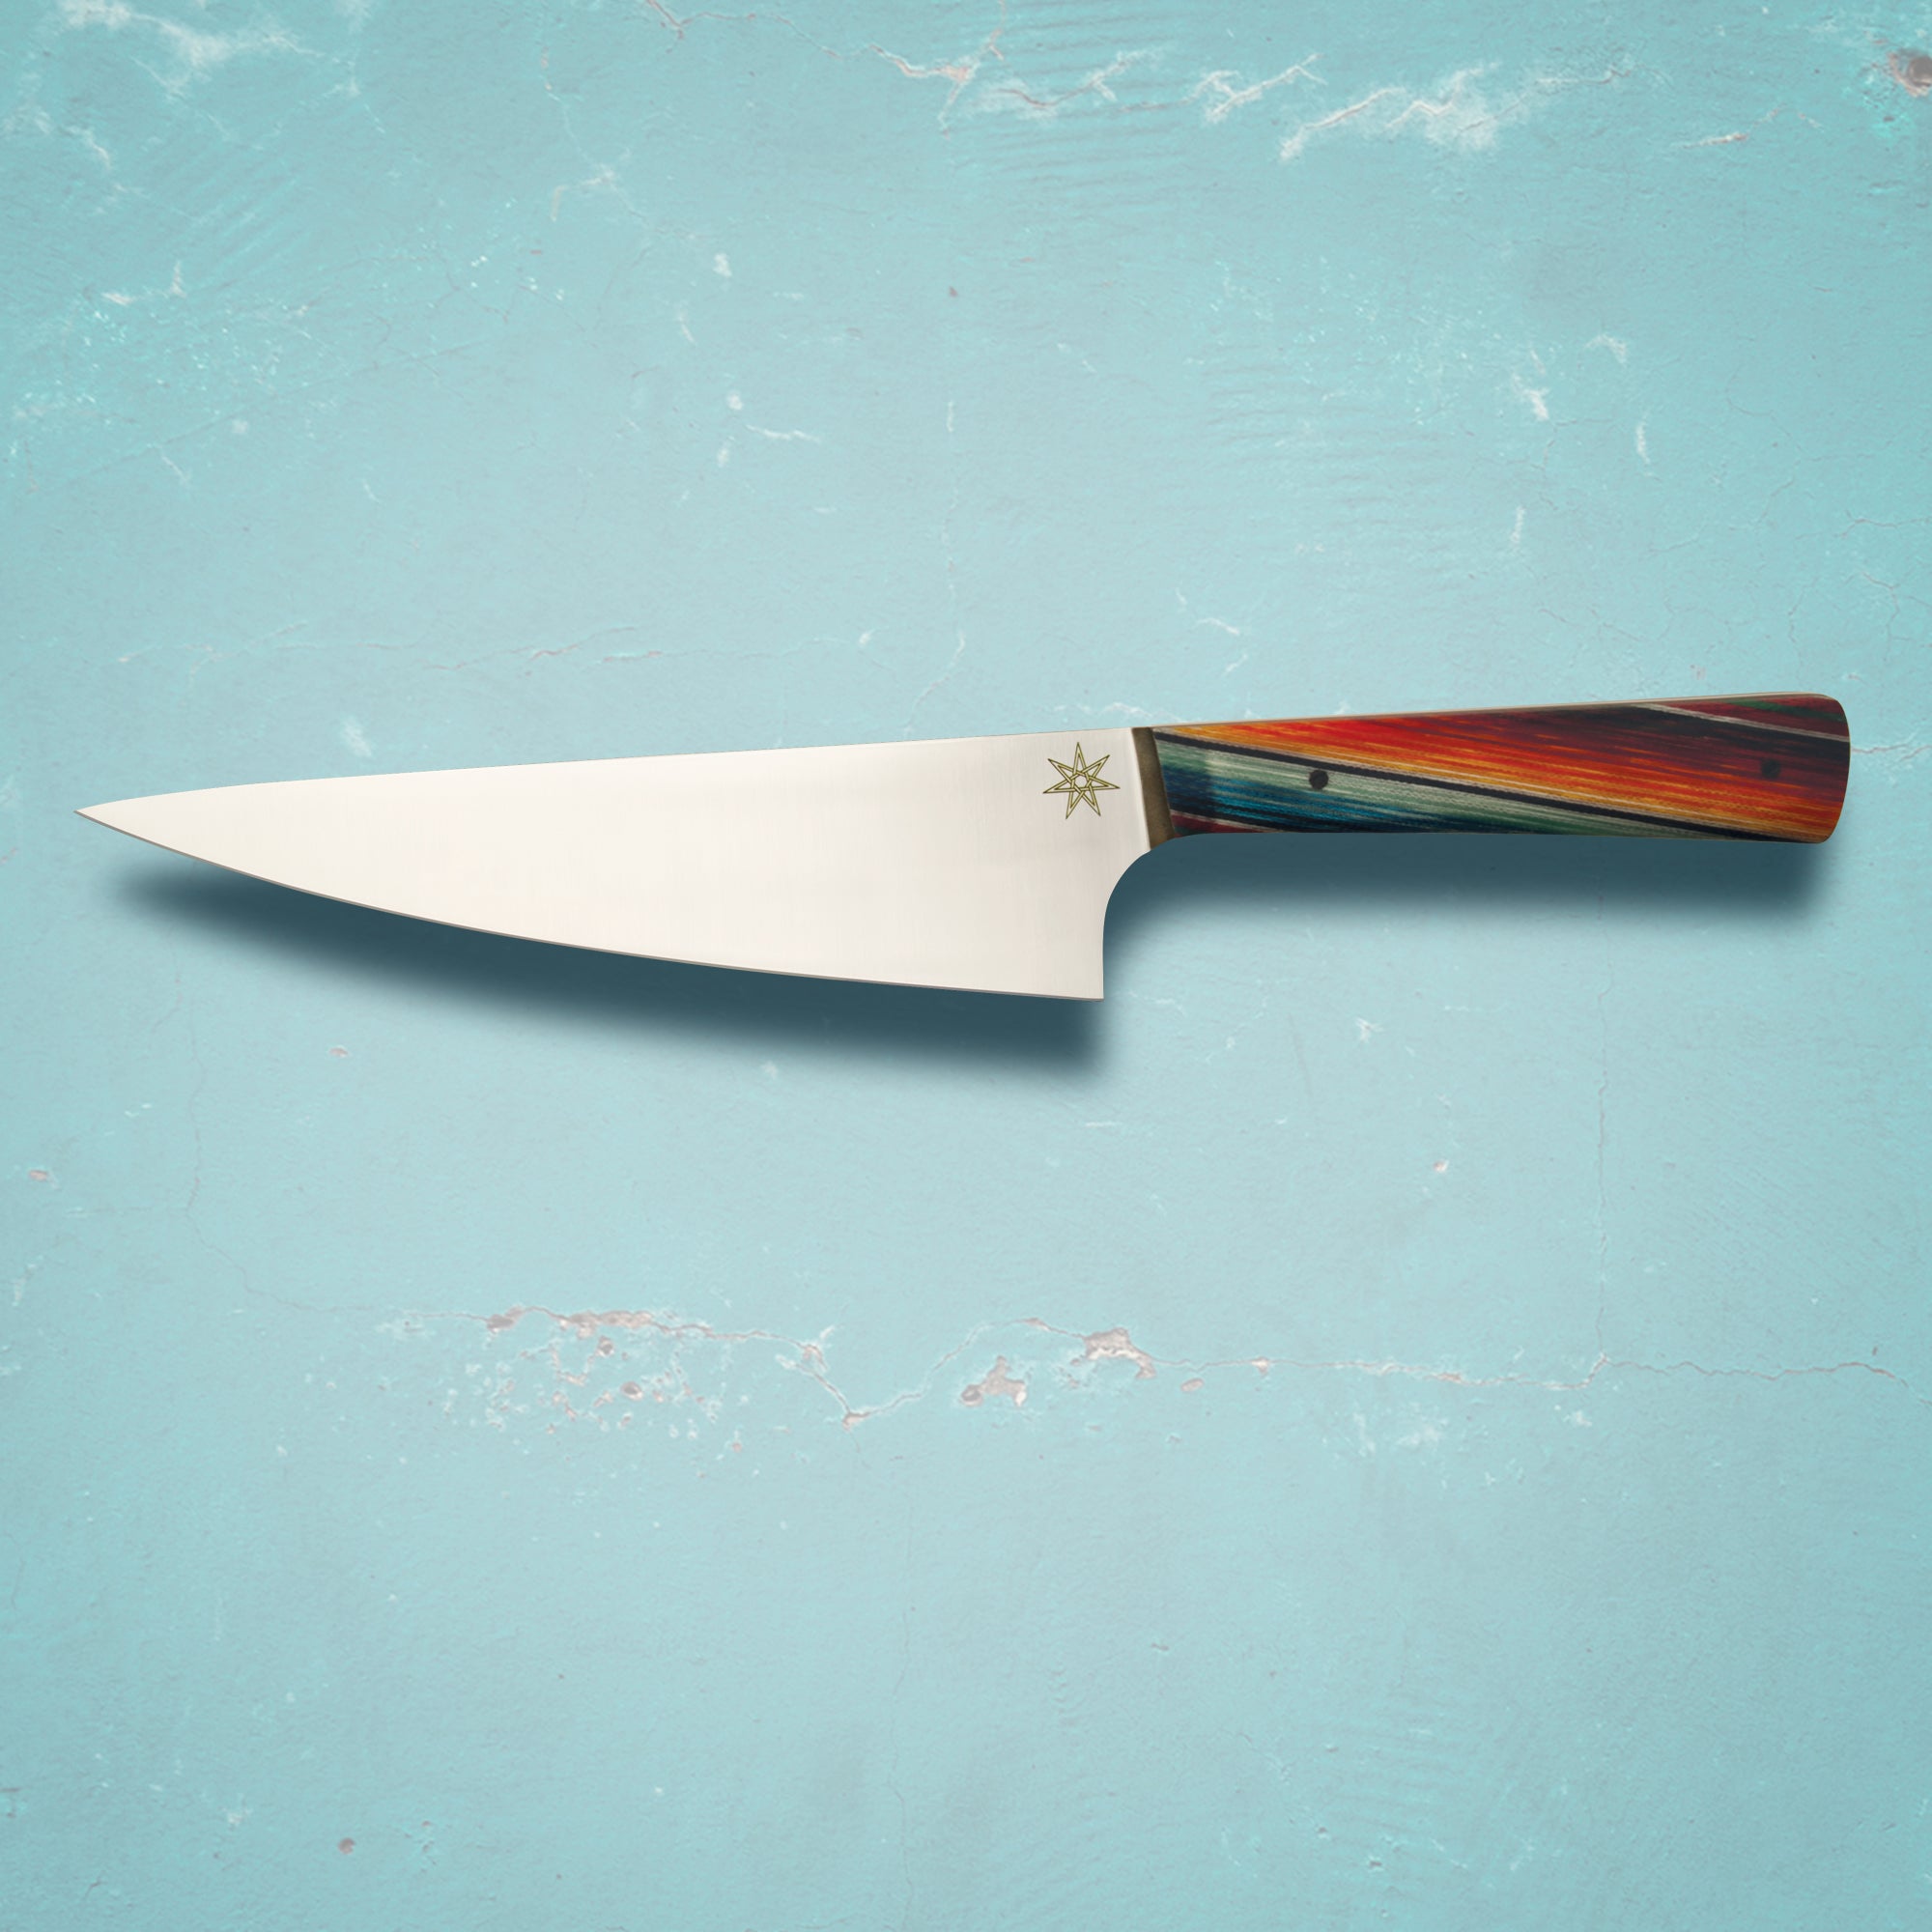 Professional Handmade 7 Chef Knife - Baja